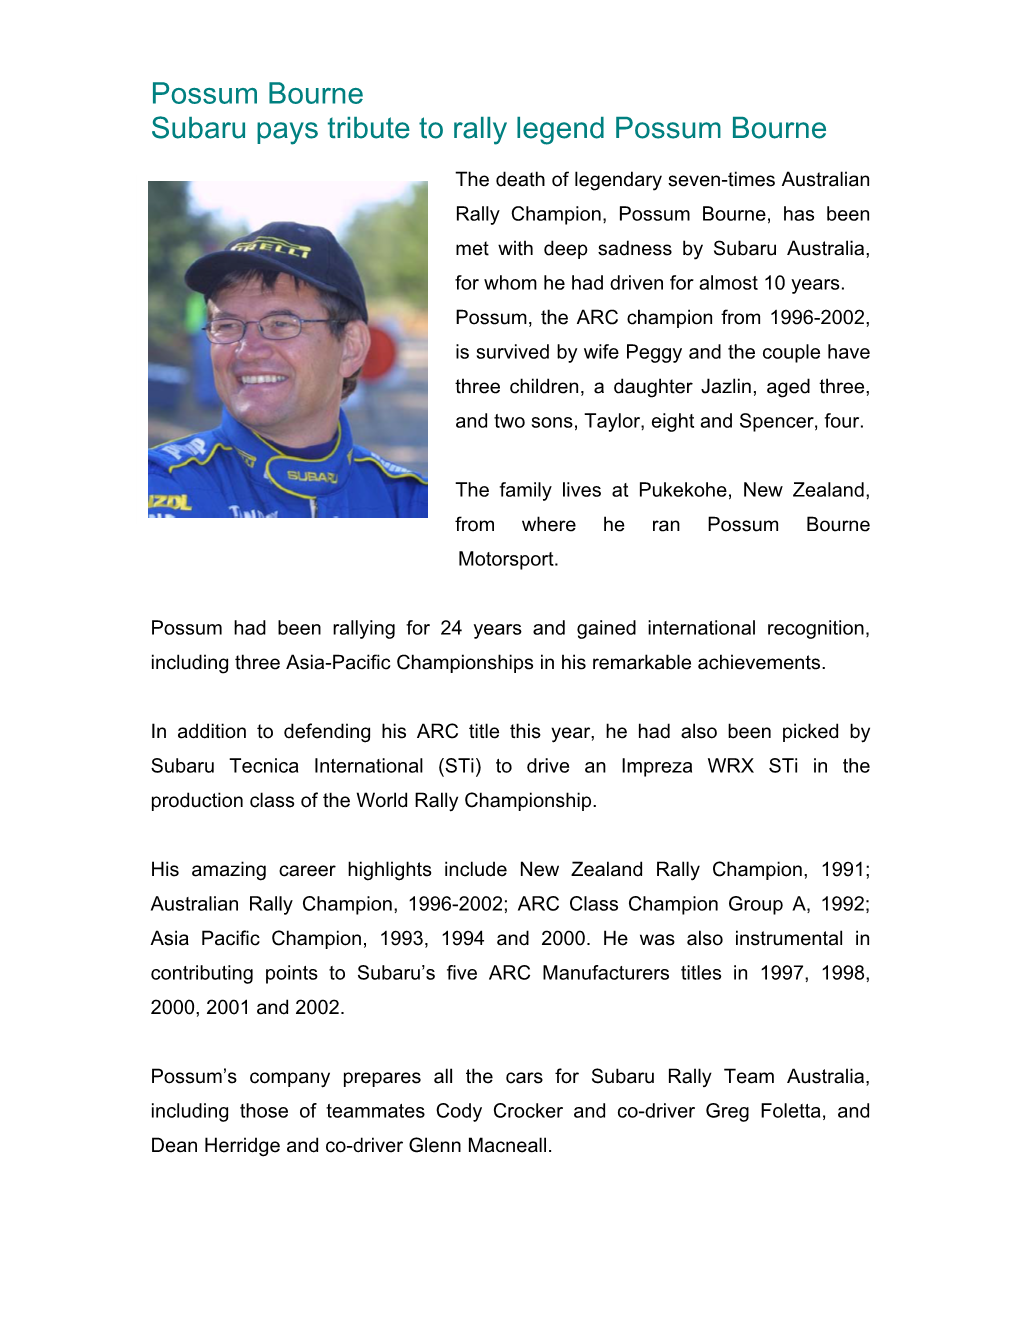 Possum Bourne Subaru Pays Tribute to Rally Legend Possum Bourne